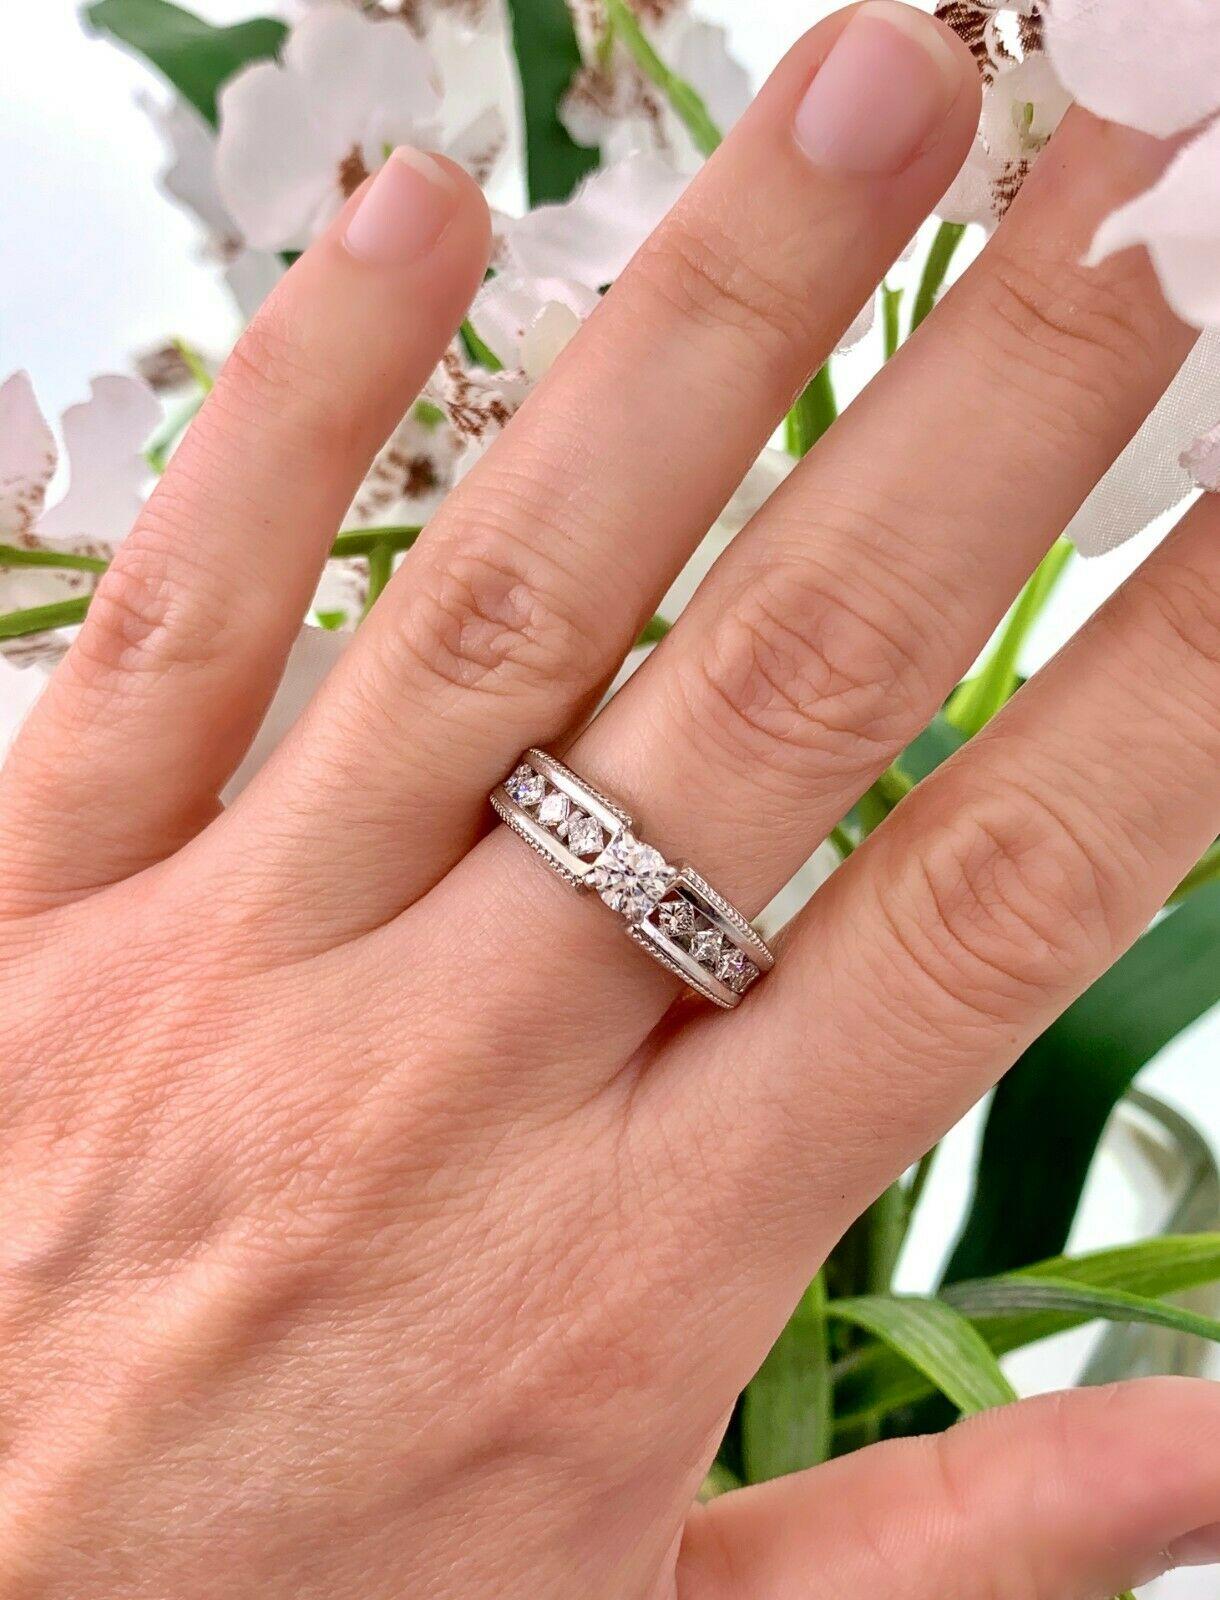 1.17 carat diamond ring on finger